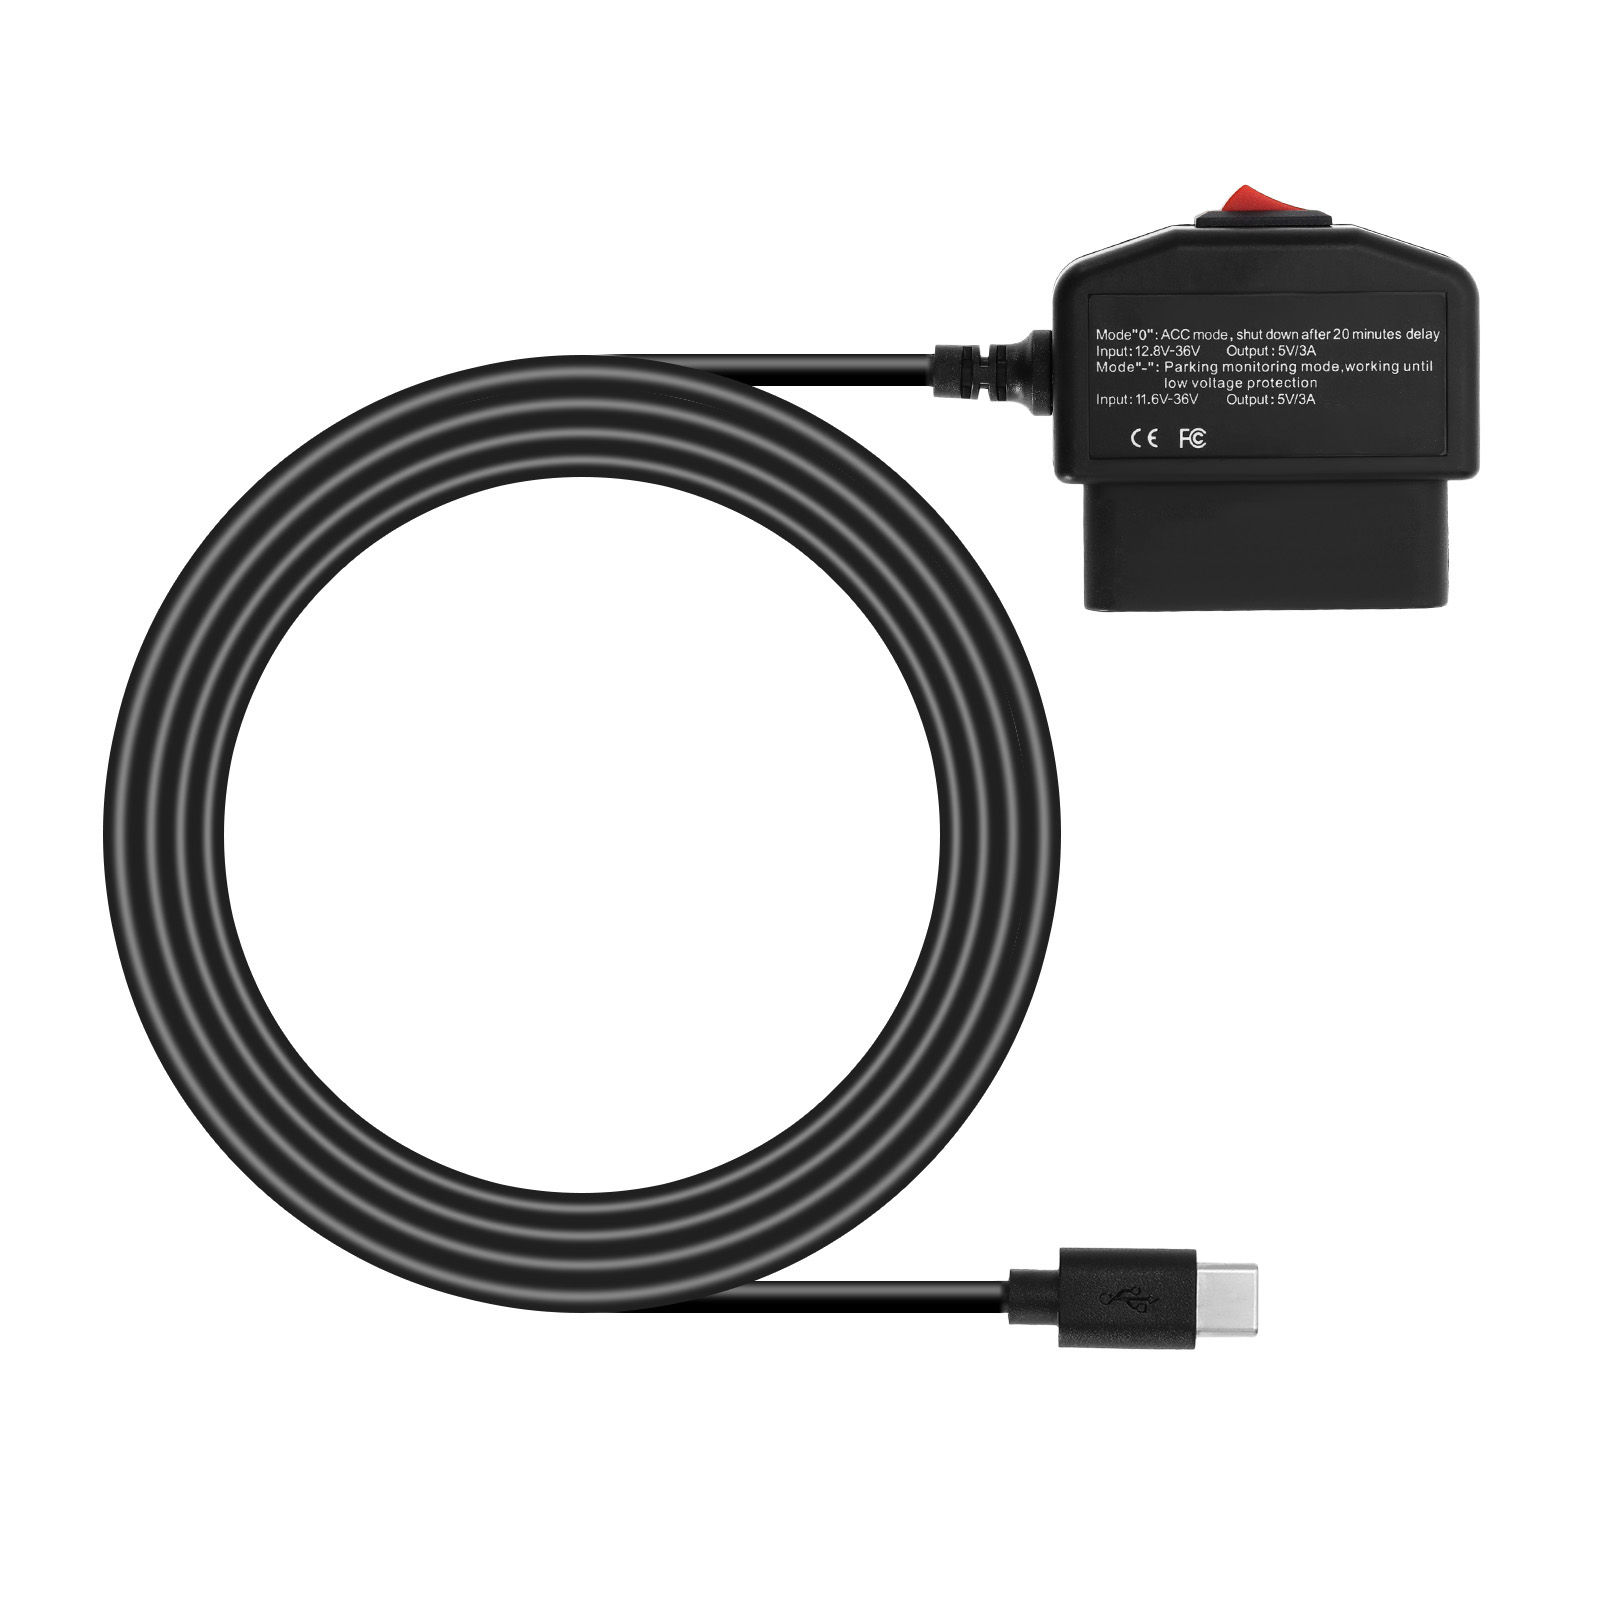 Car OBD Power Cable for Dash Camera 24 Hours Surveillance/ACC Mode USB C  Port